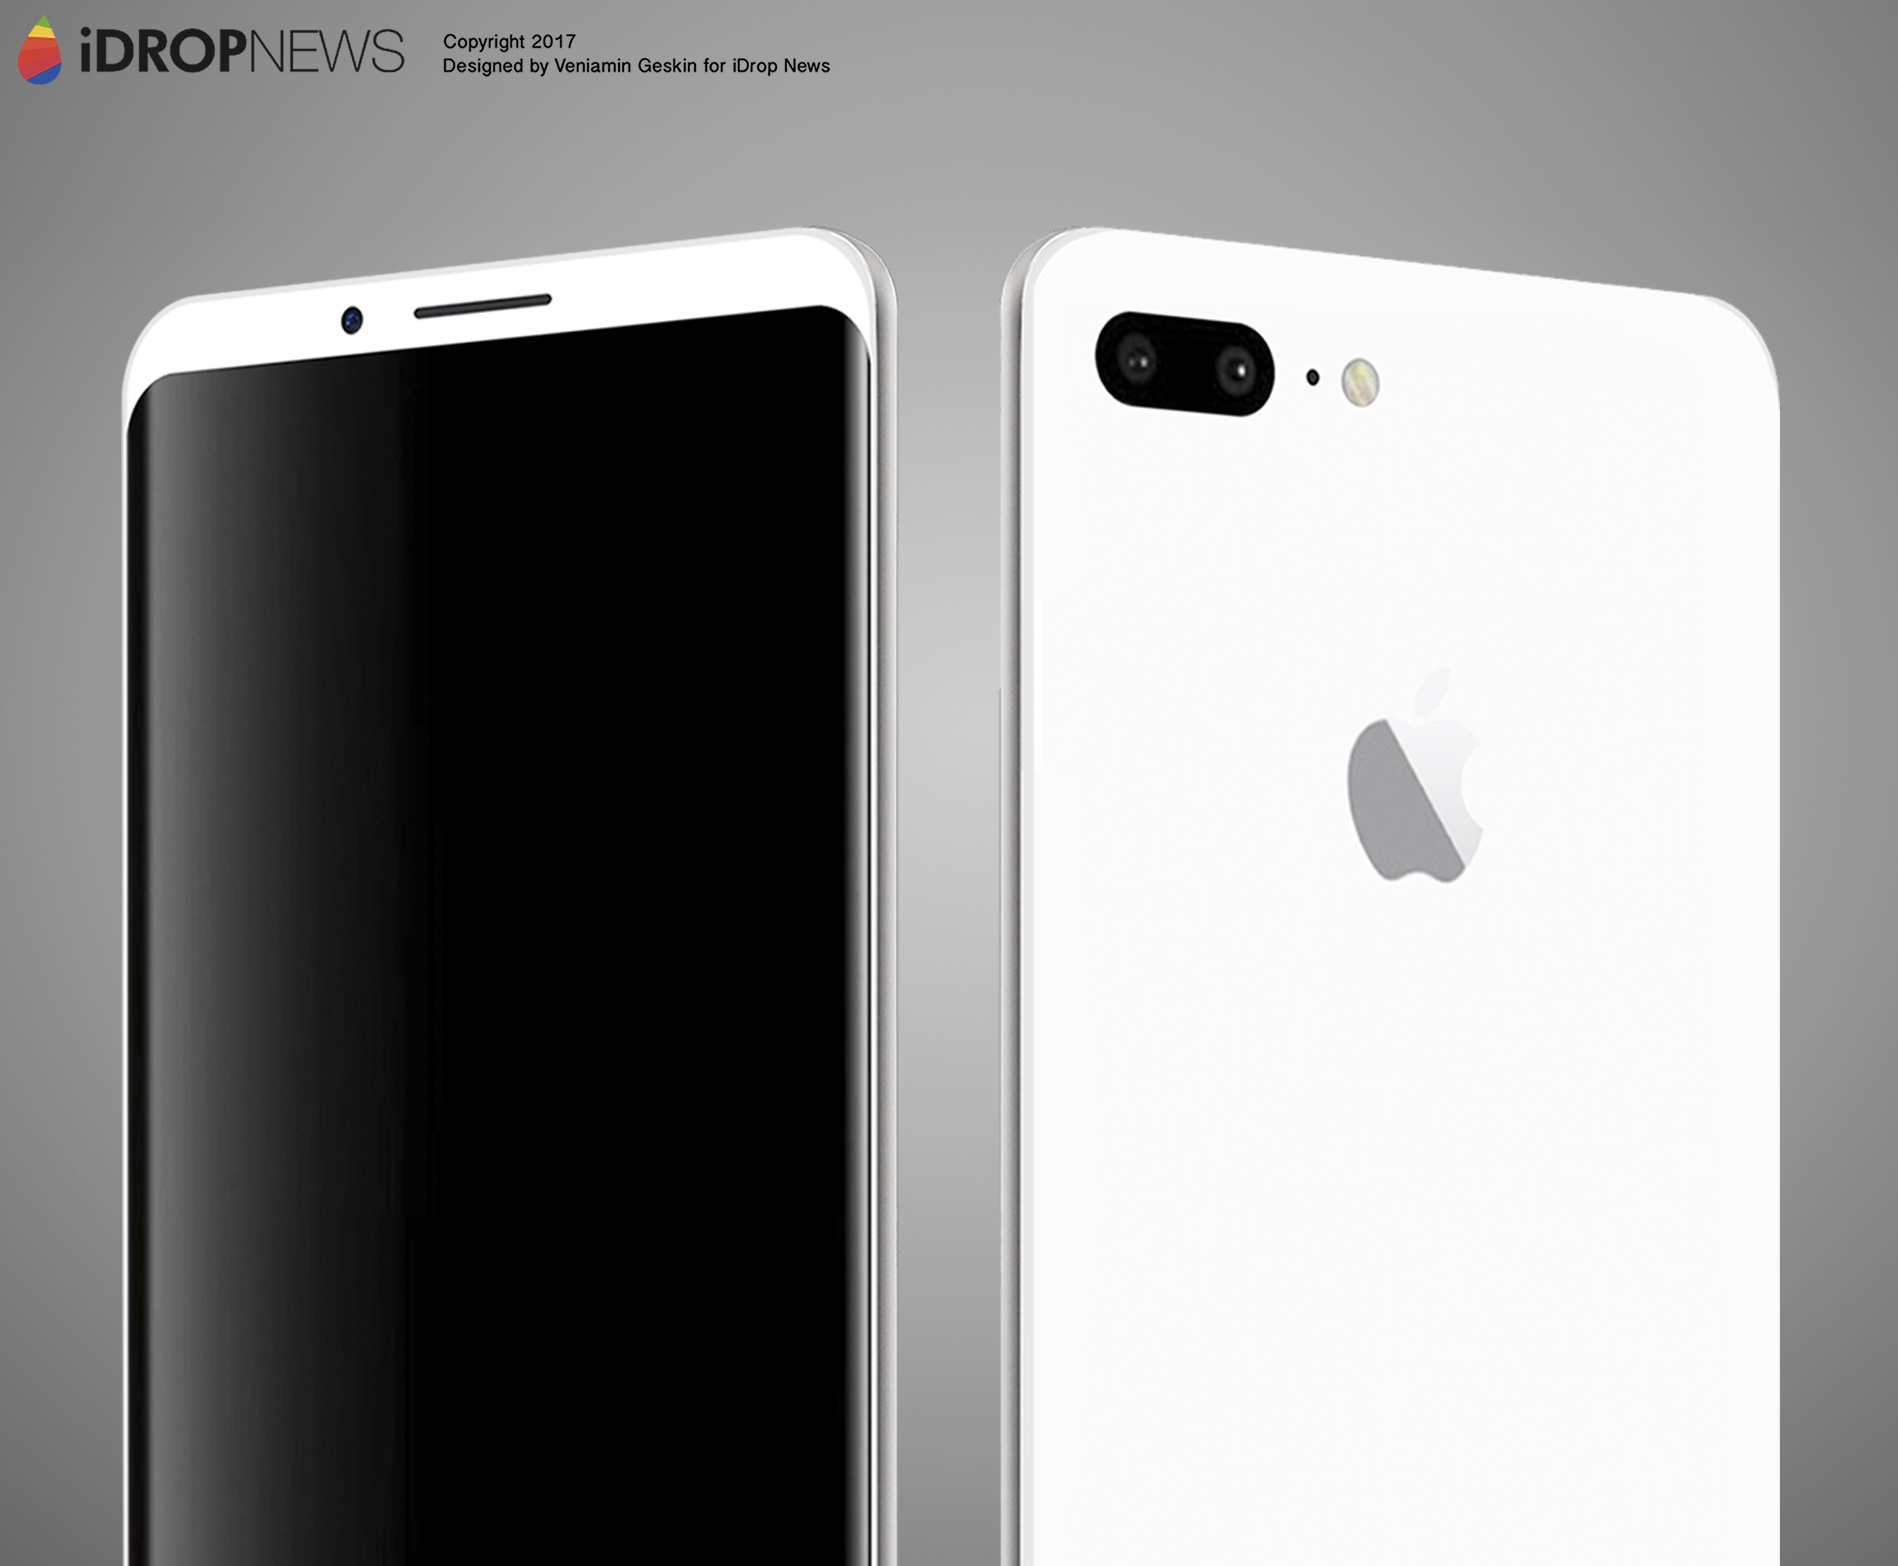 iPhone 8 Concept